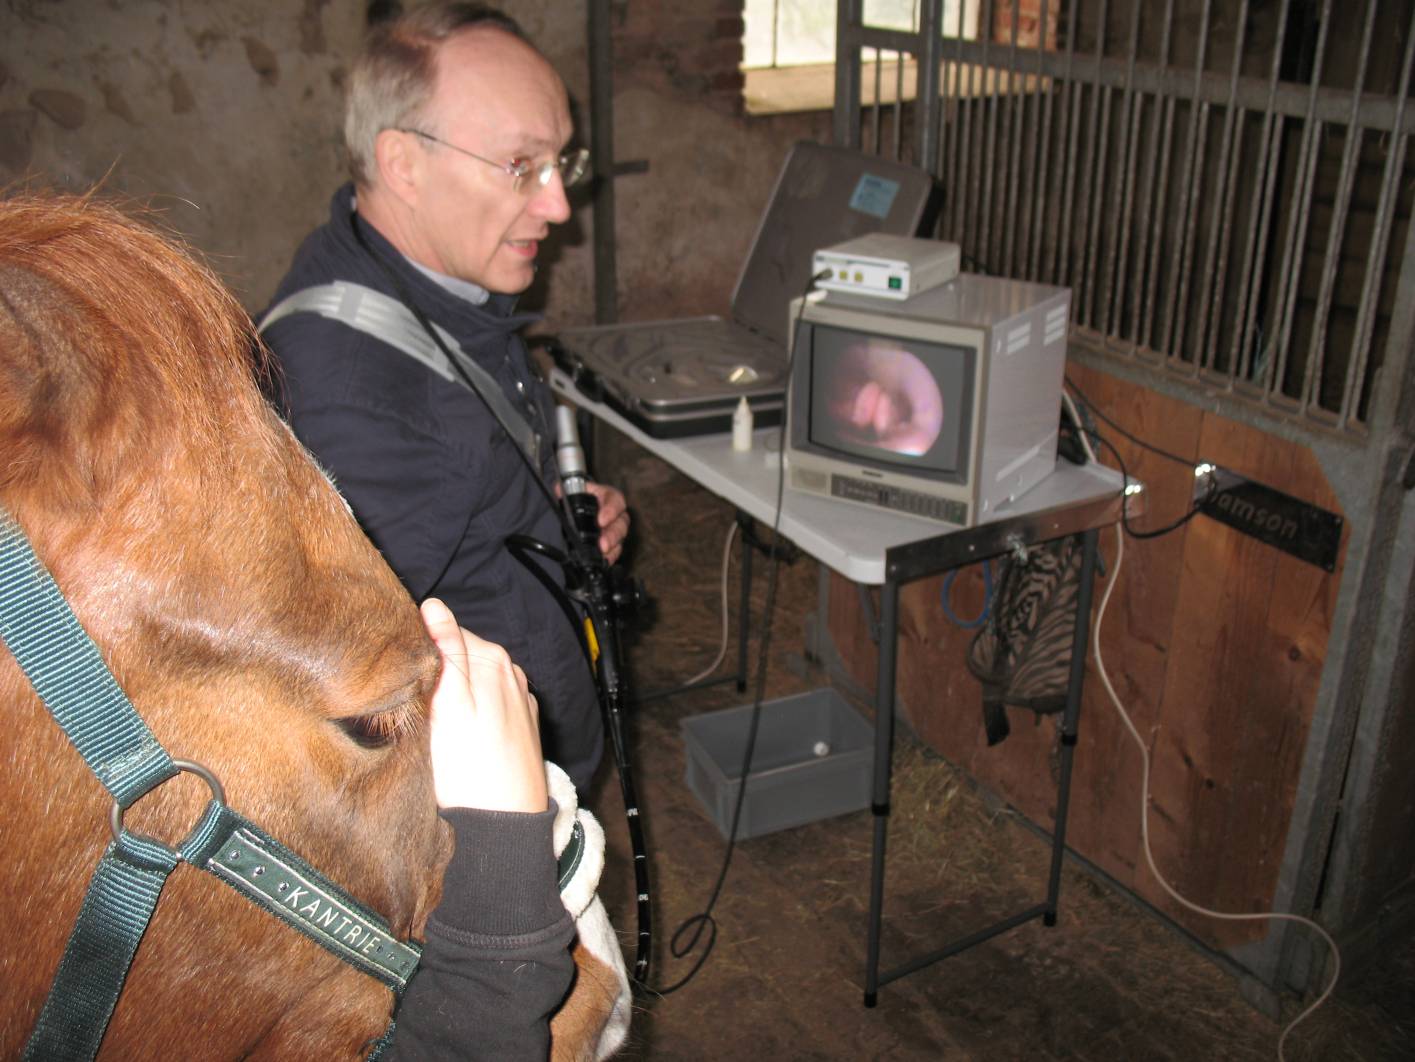 Endoskopie per Video Pferd Kehlkopf Luftröhre